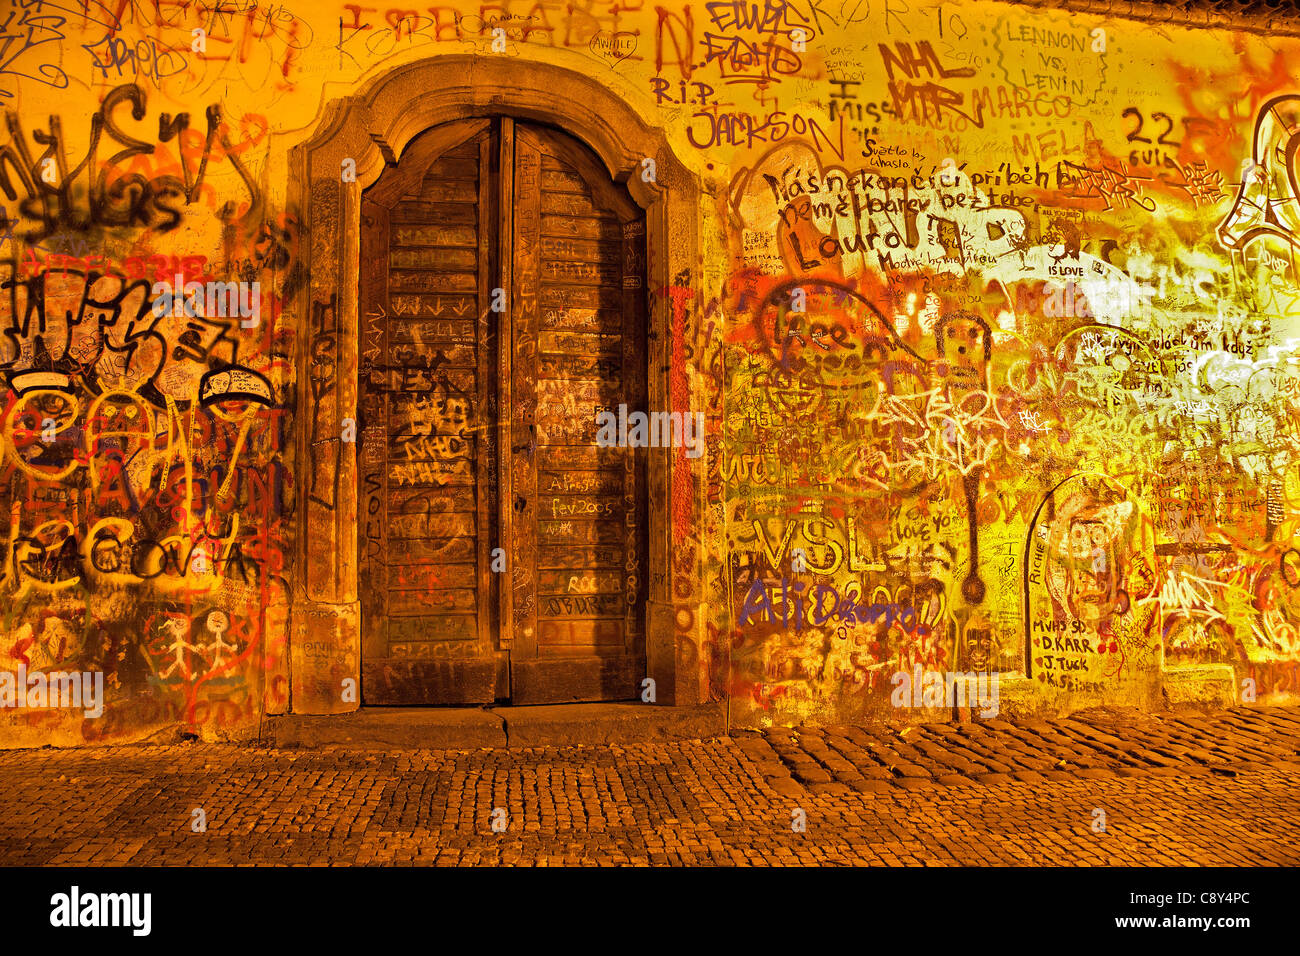 Prague - door by Lennon Wall at night Stock Photo